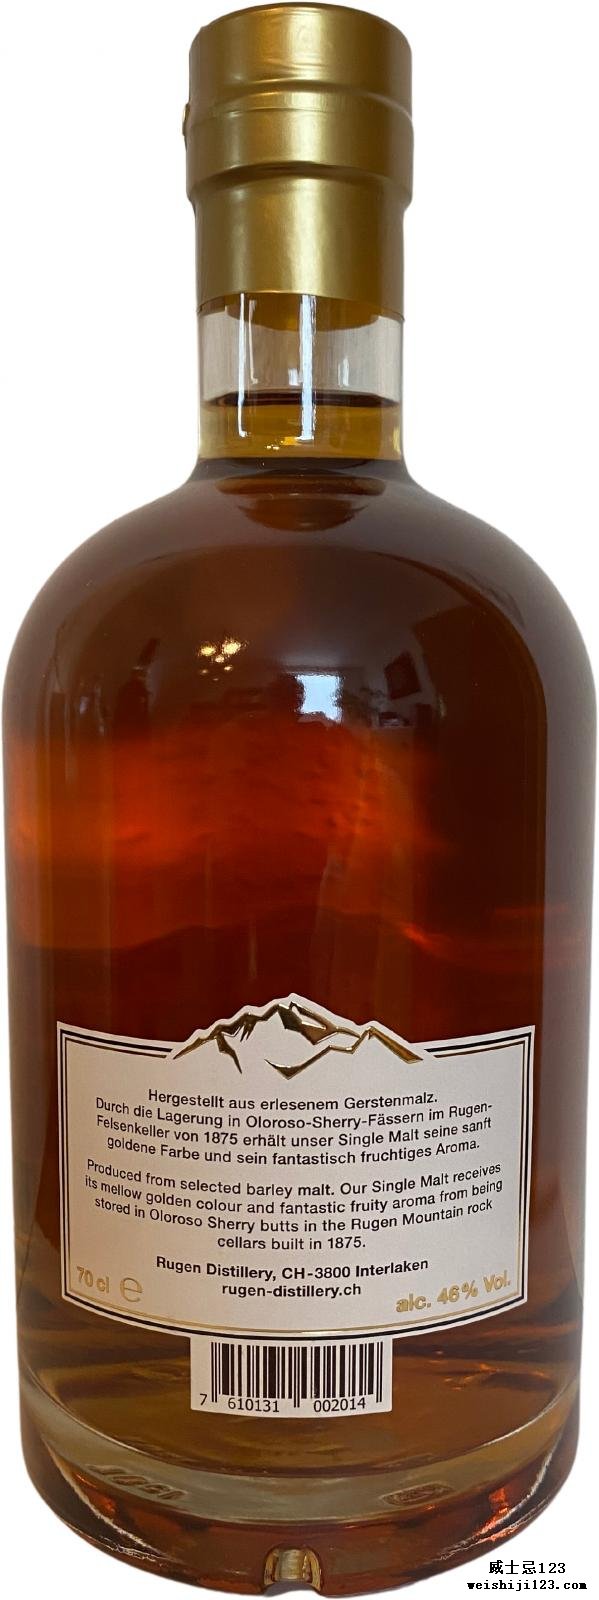 Swiss Mountain Single Malt Whisky